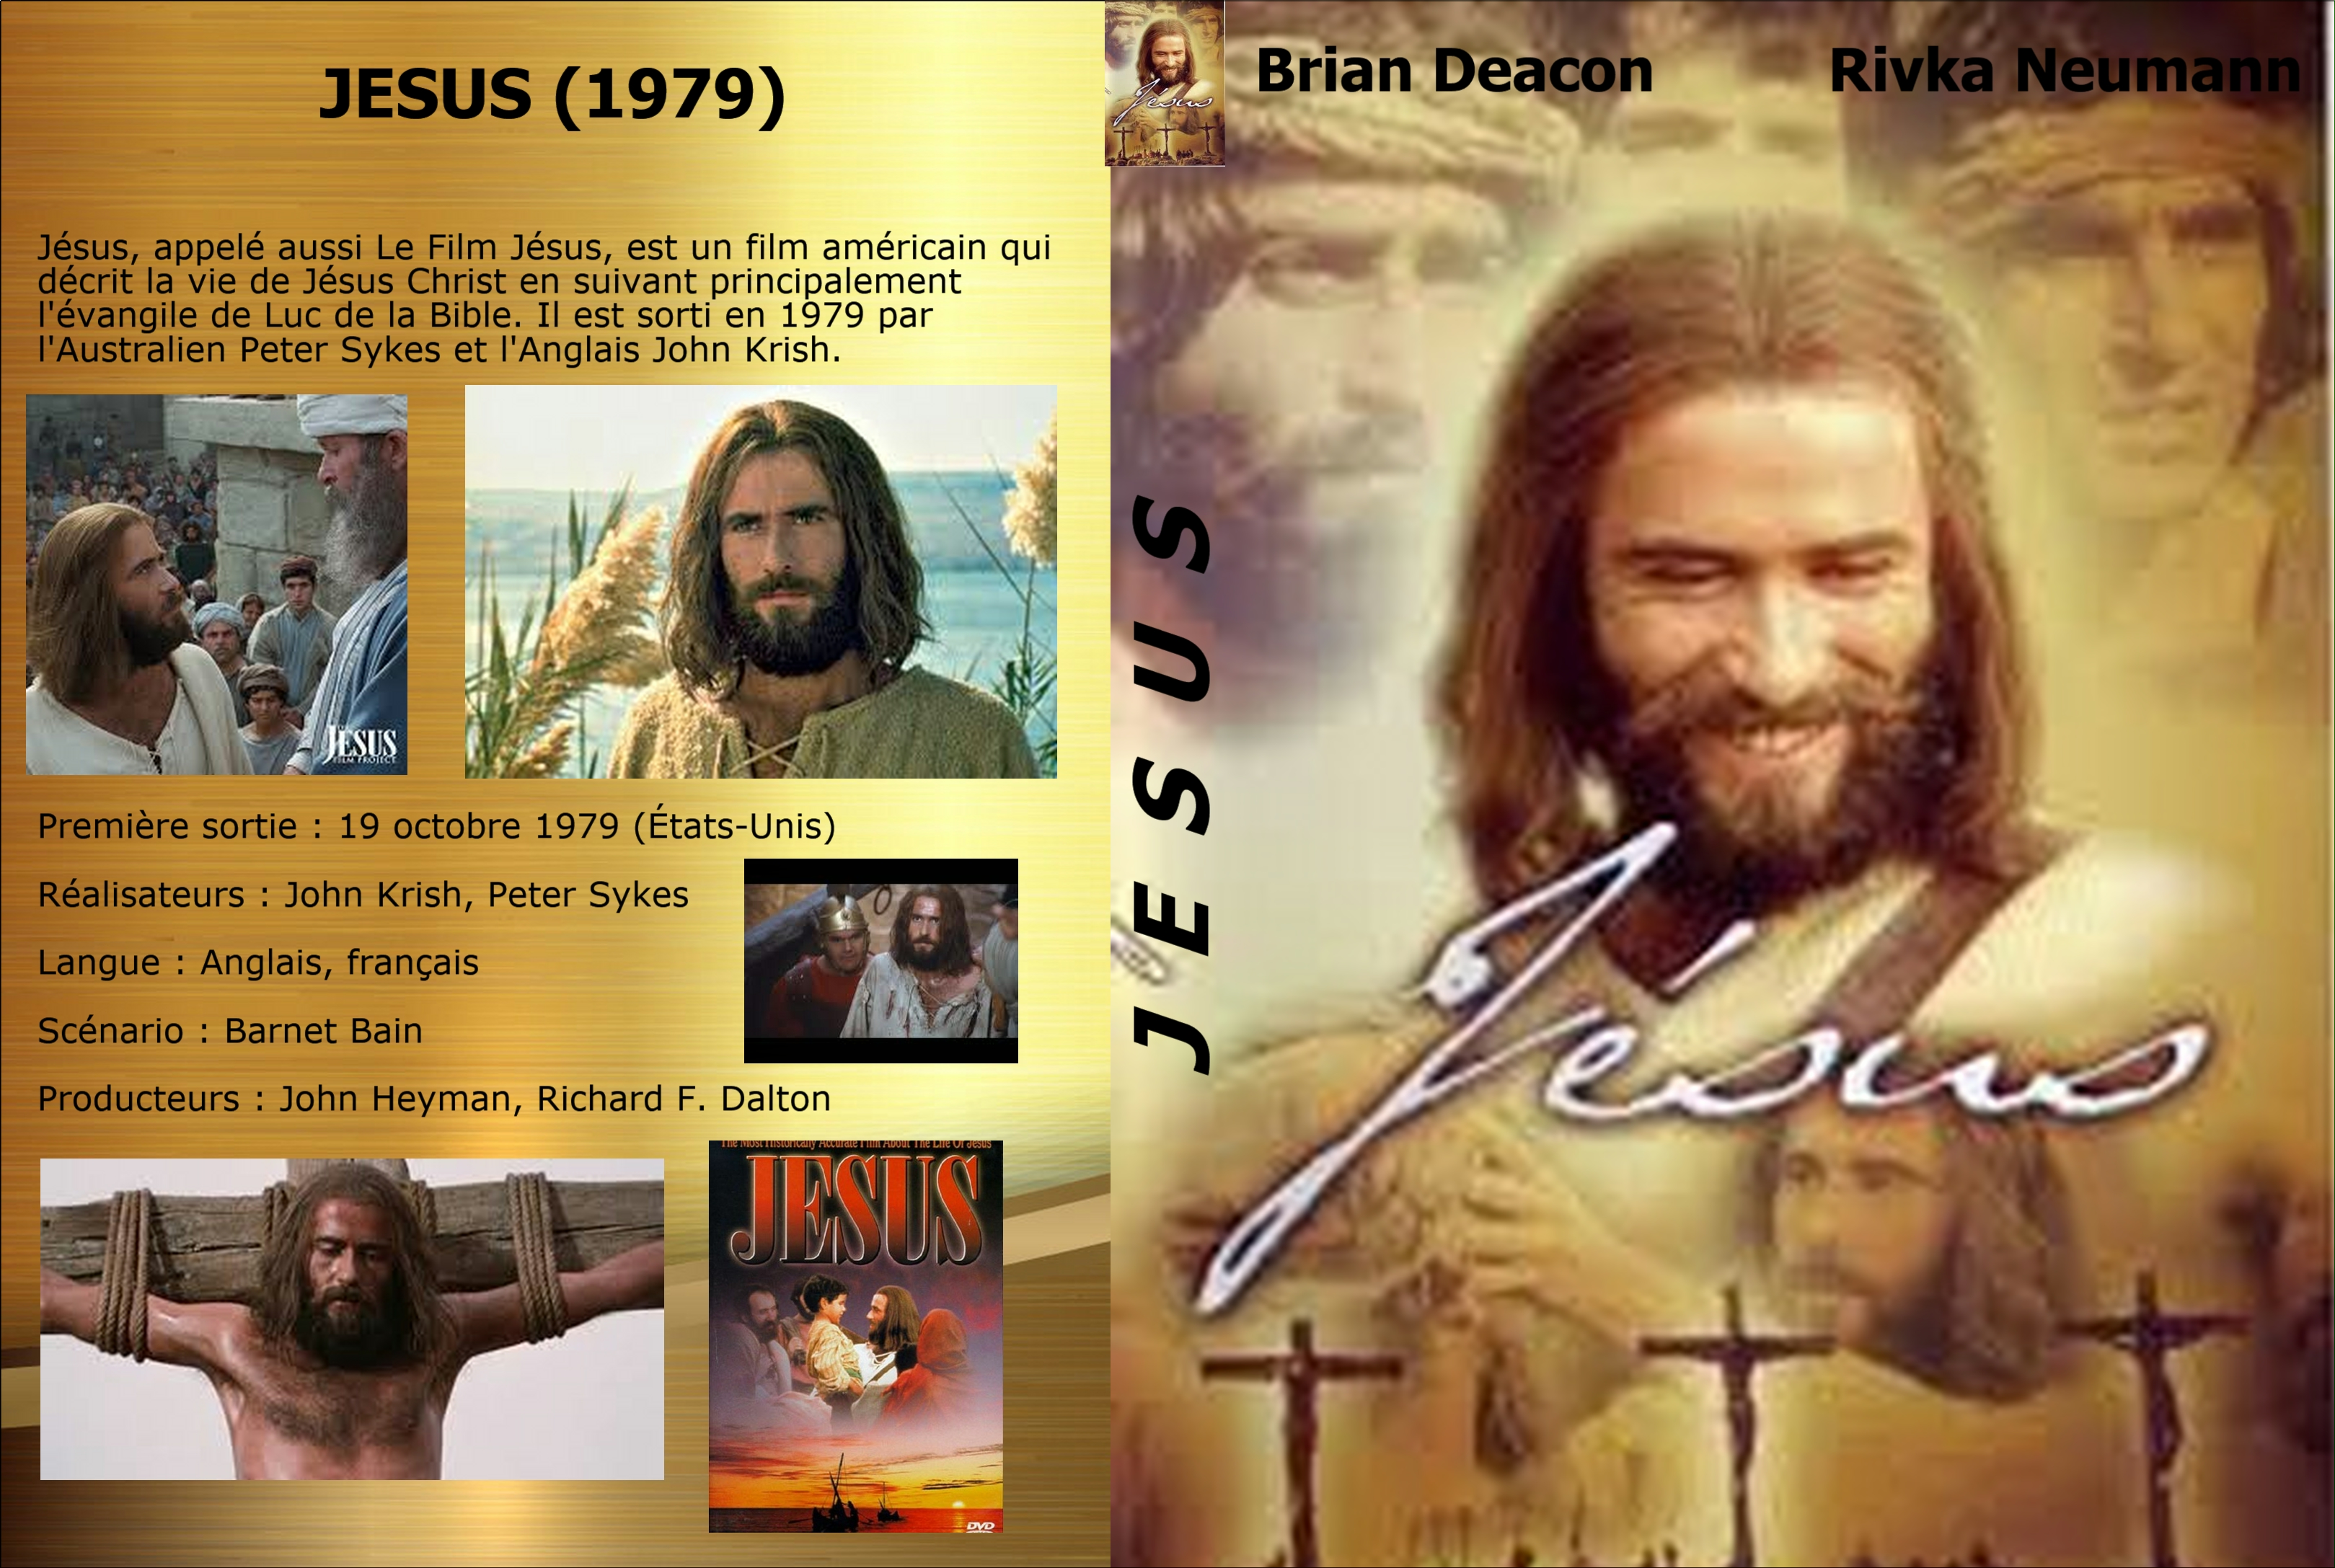 Jaquette DVD Jesus 1979 custom